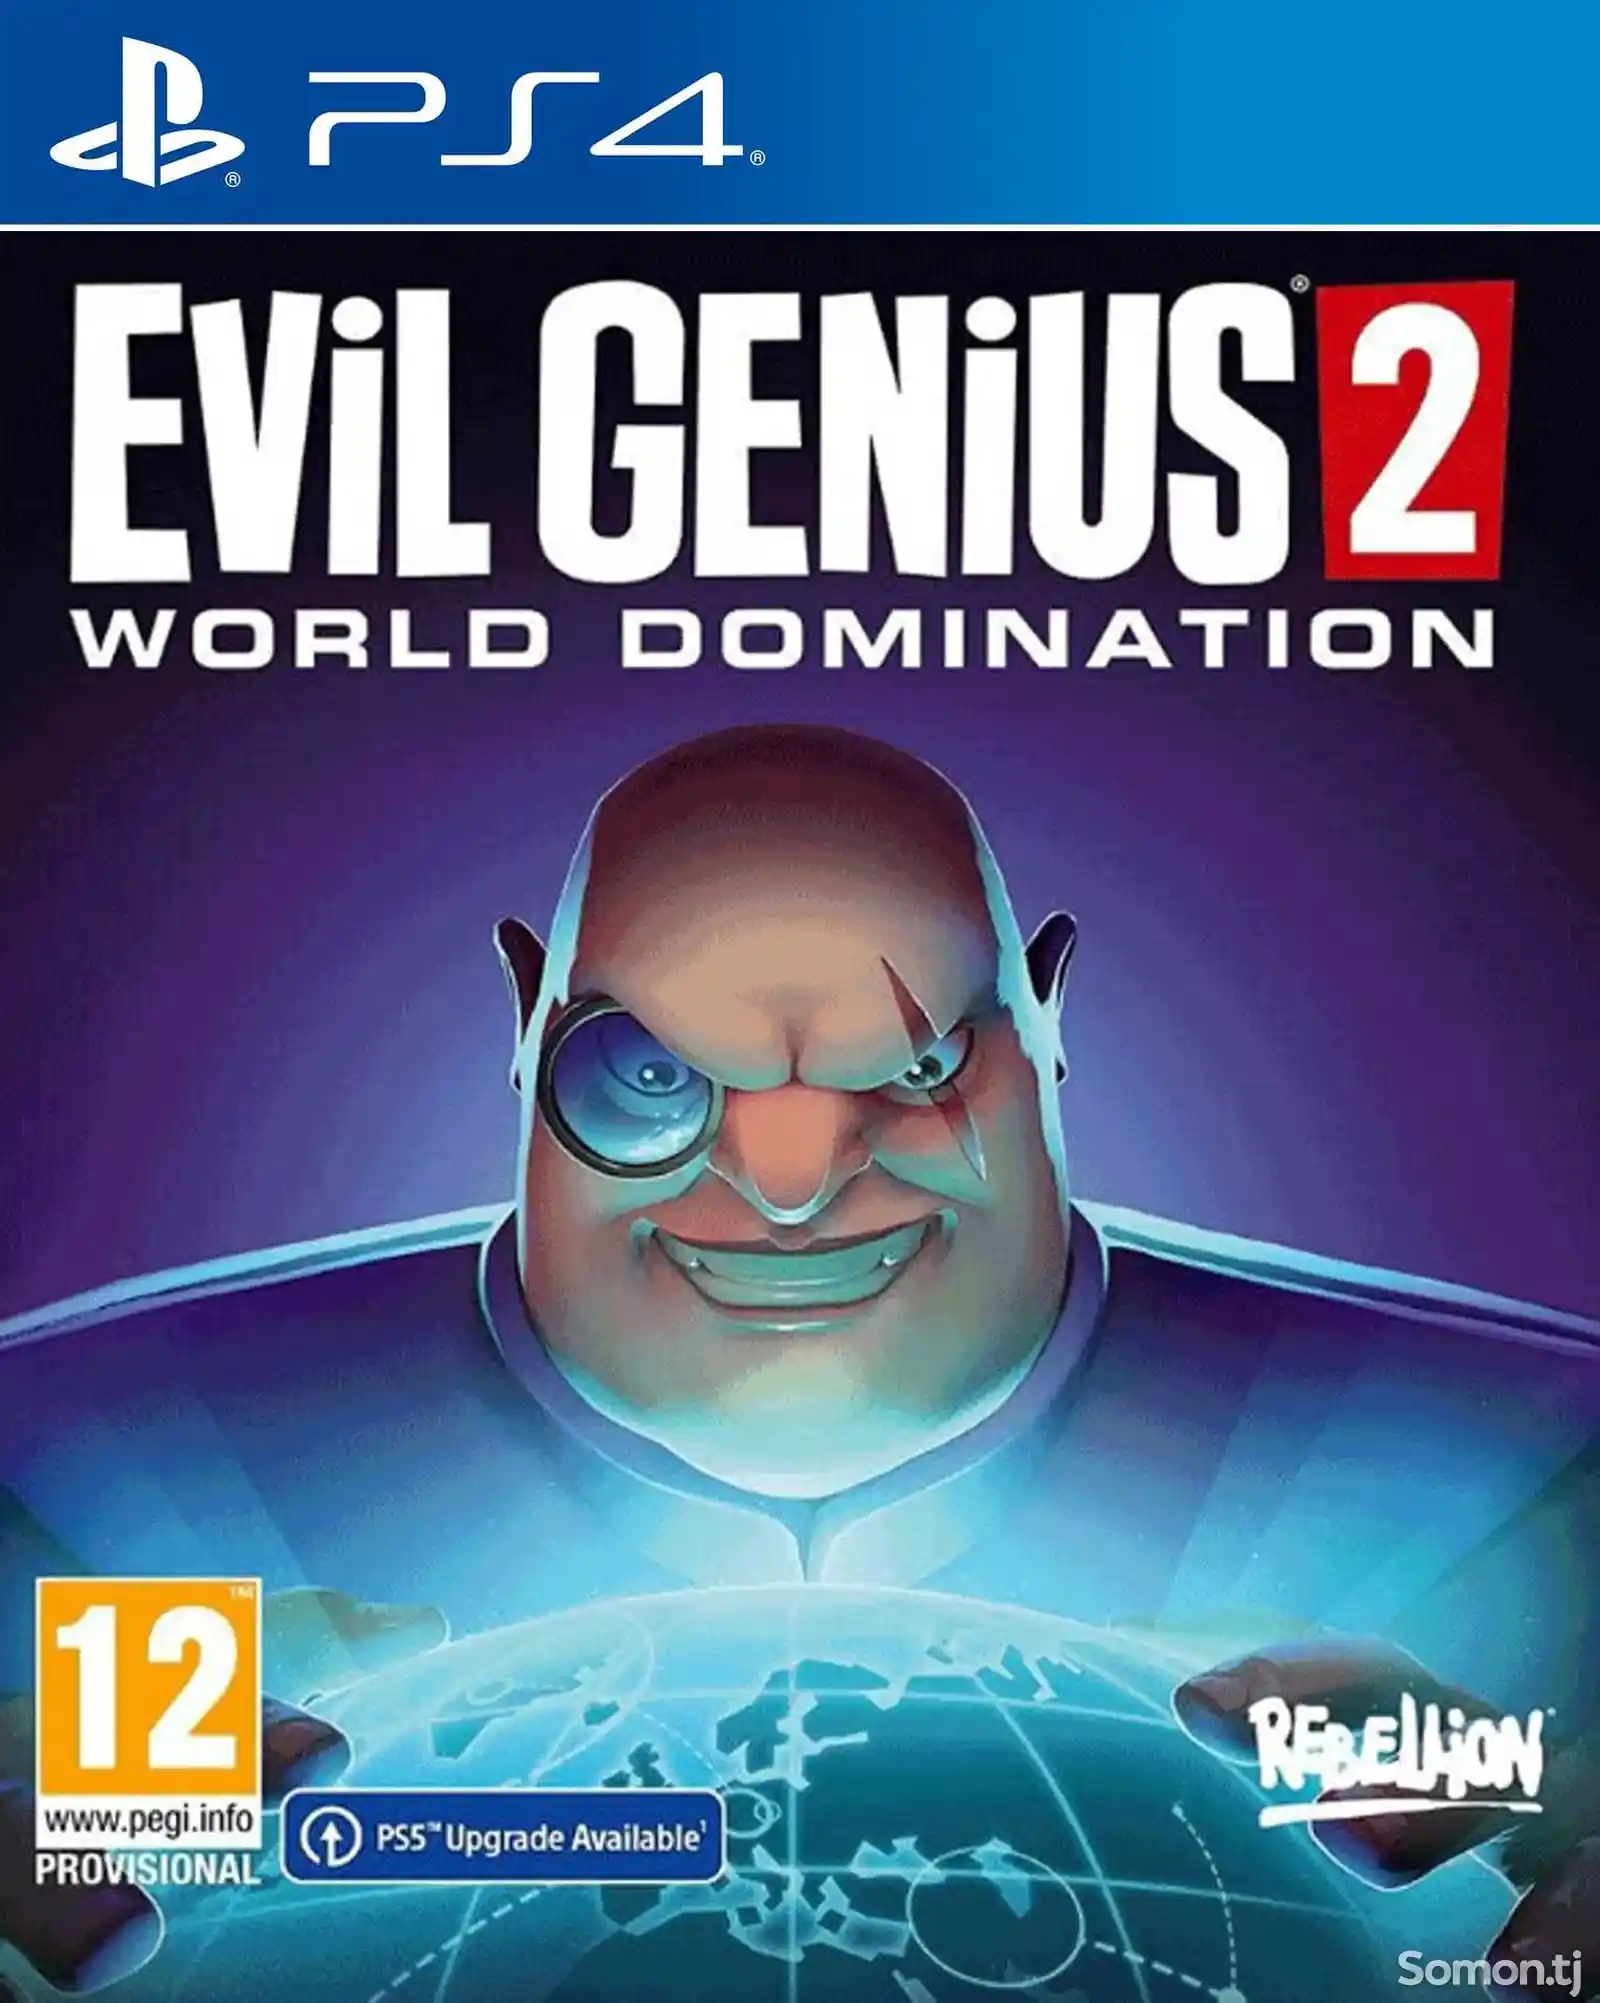 Игра Evil genius 2 для PS-4 / 5.05 / 6.72 / 7.02 / 7.55 / 9.00 /-1